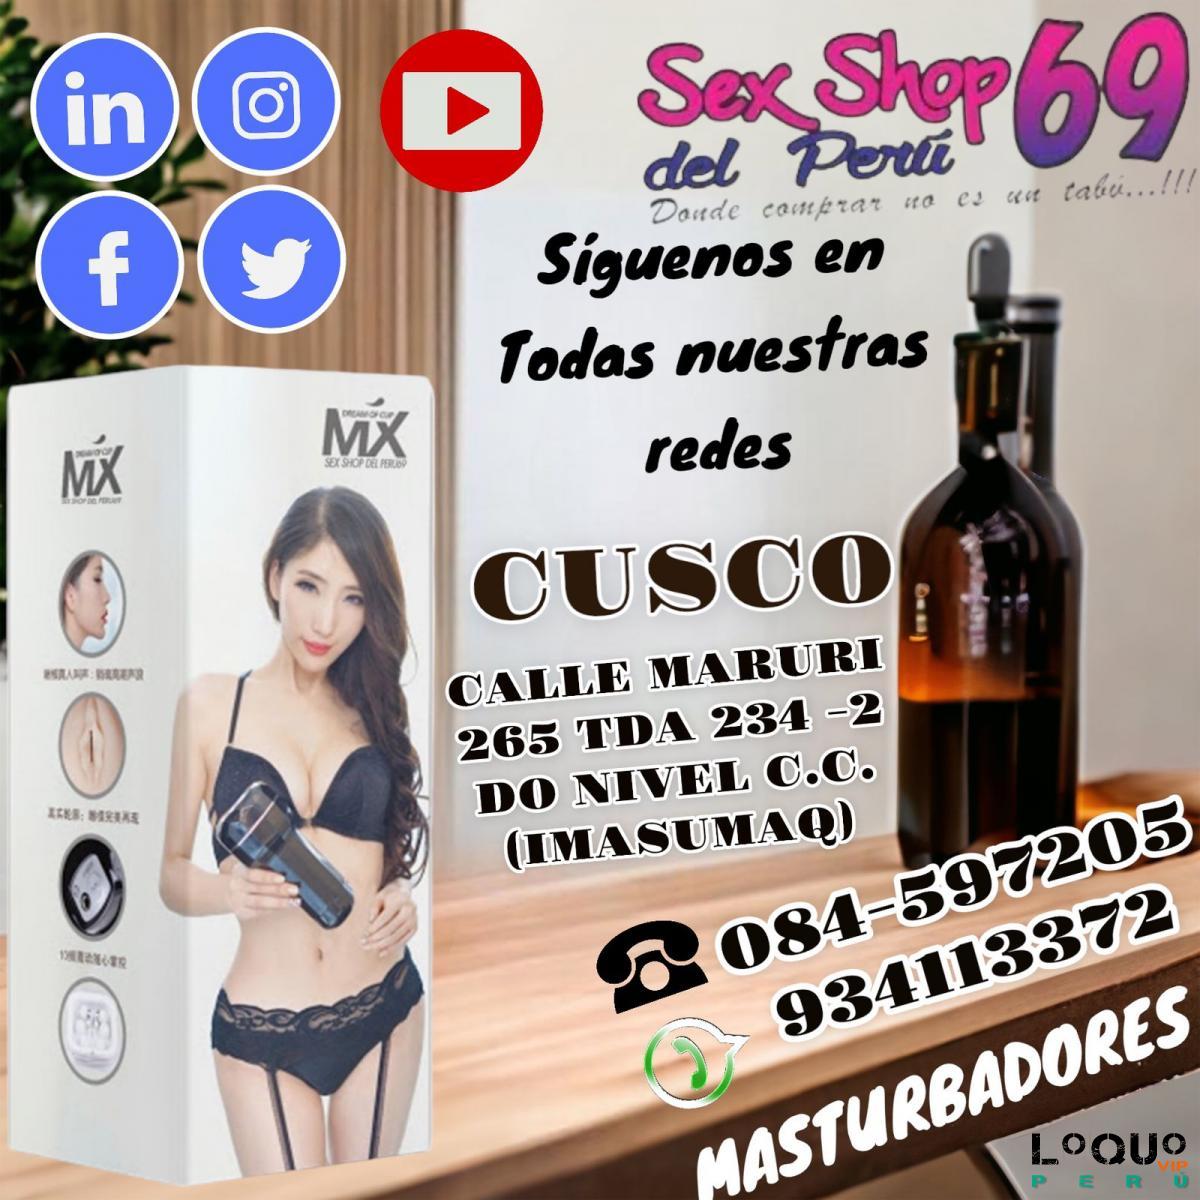 Sex Shop Arequipa: masturbador estuche_dream cup _sexshop69_arequipa